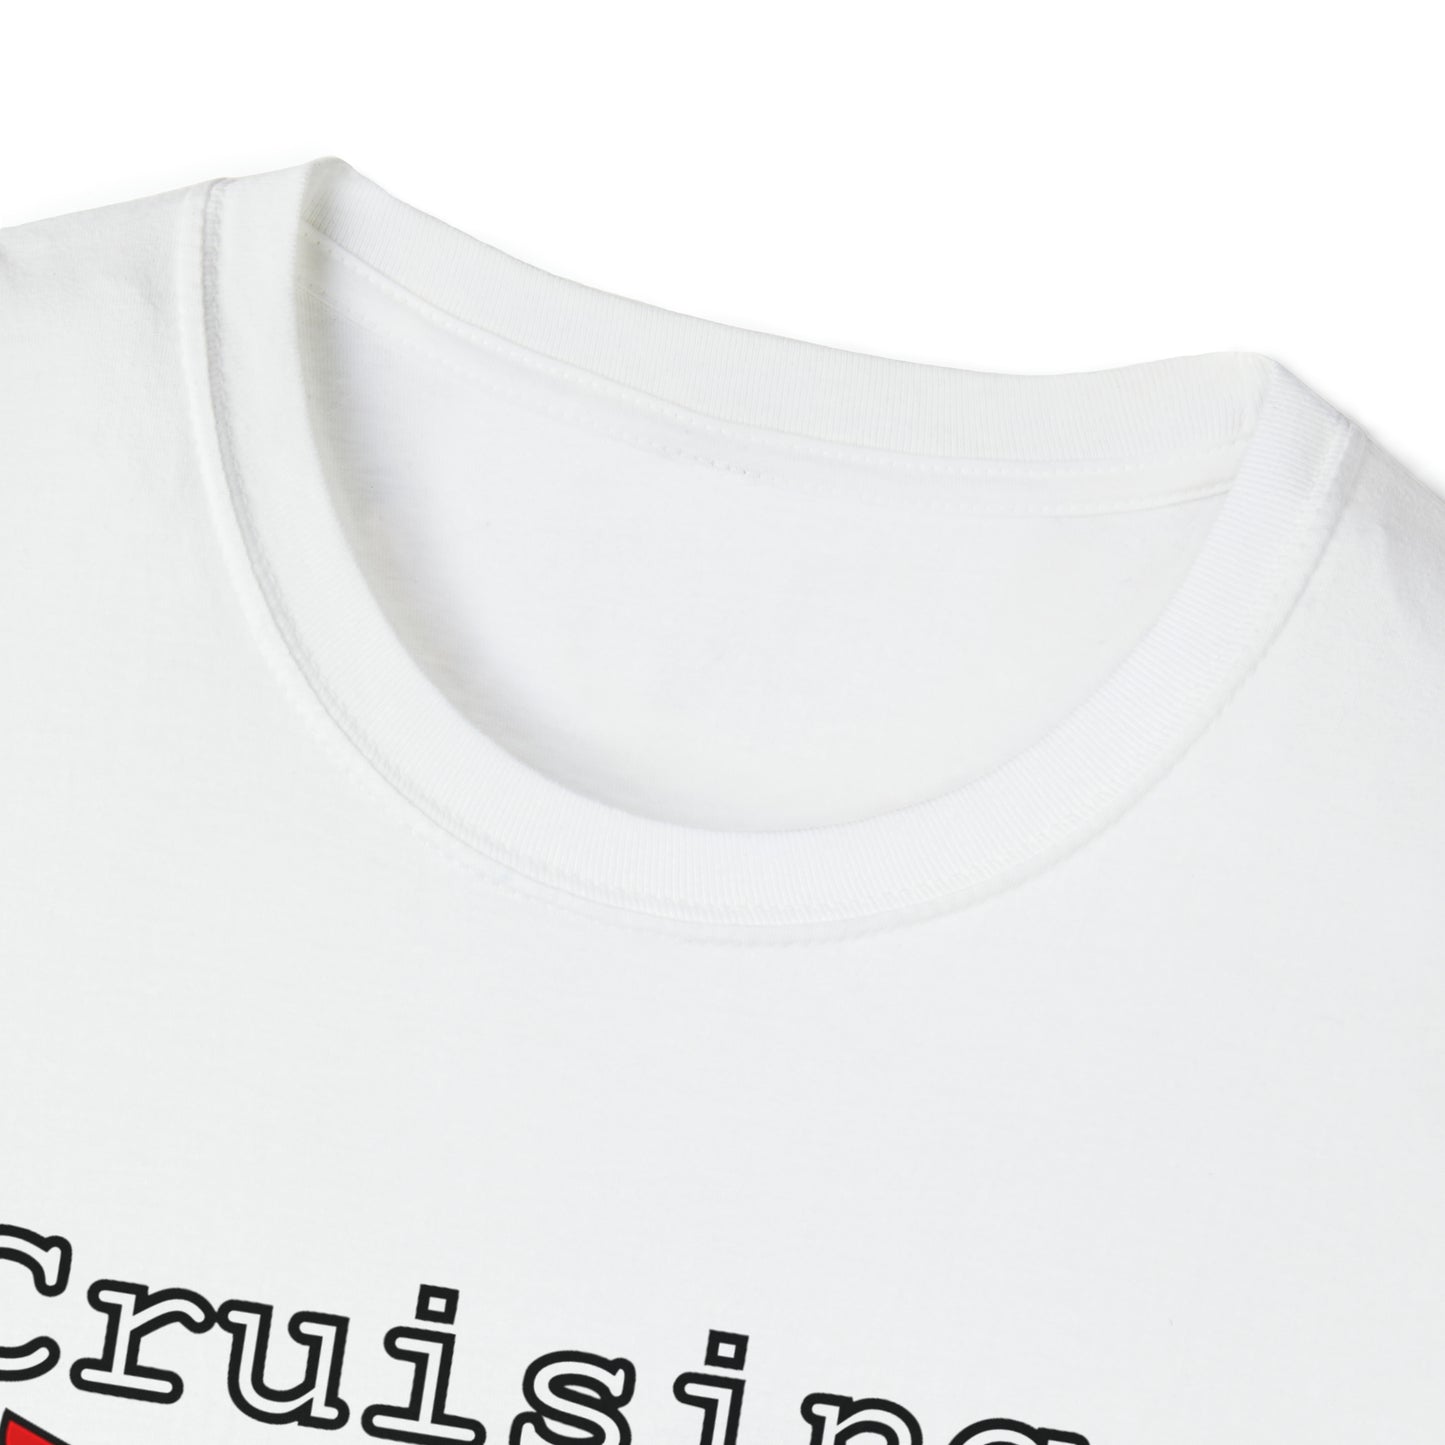 "Cruising and Living My Best Life" T-Shirt